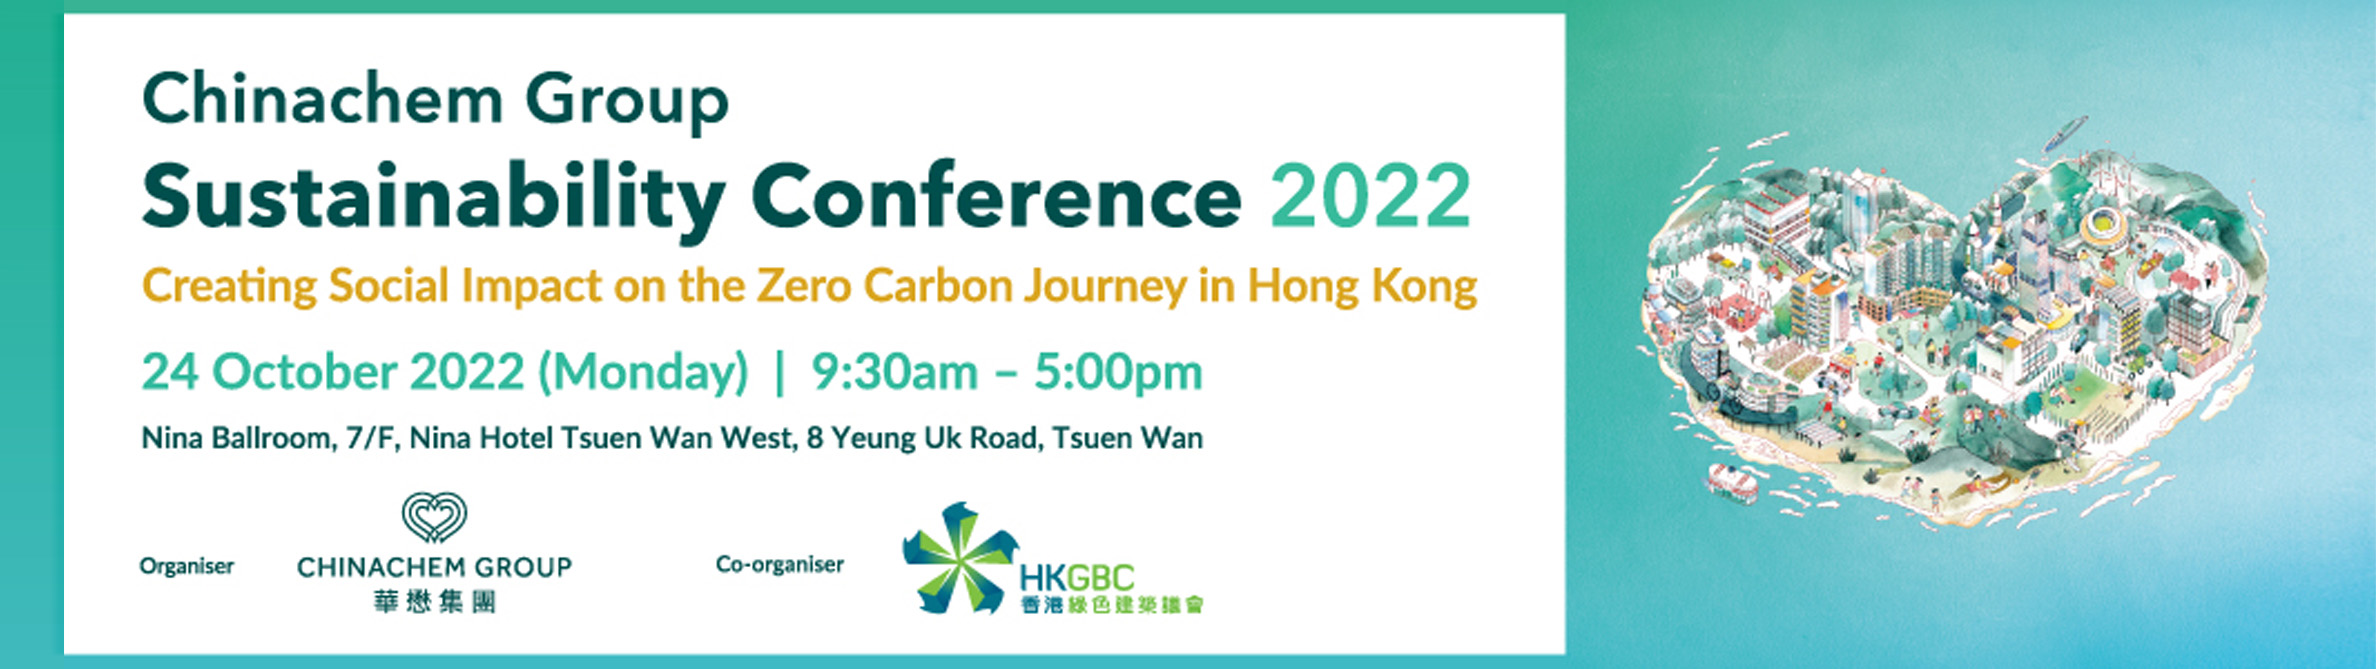 Chinachem Group Sustainability Conference 2022